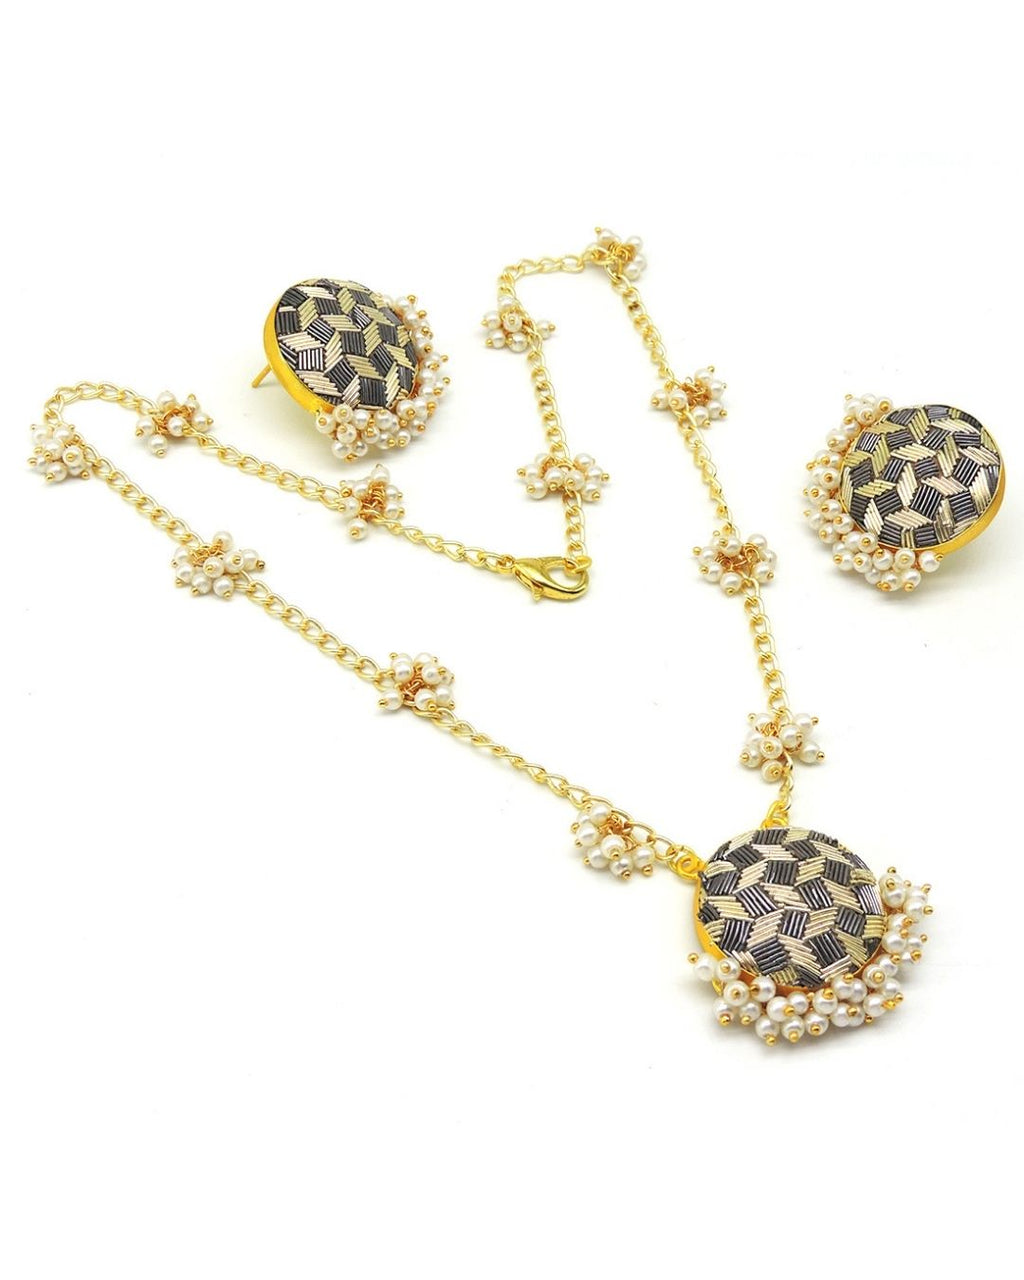 Zardosi Crown Necklace - Necklaces - Handcrafted Jewellery - Made in India - Dubai Jewellery, Fashion & Lifestyle - Dori